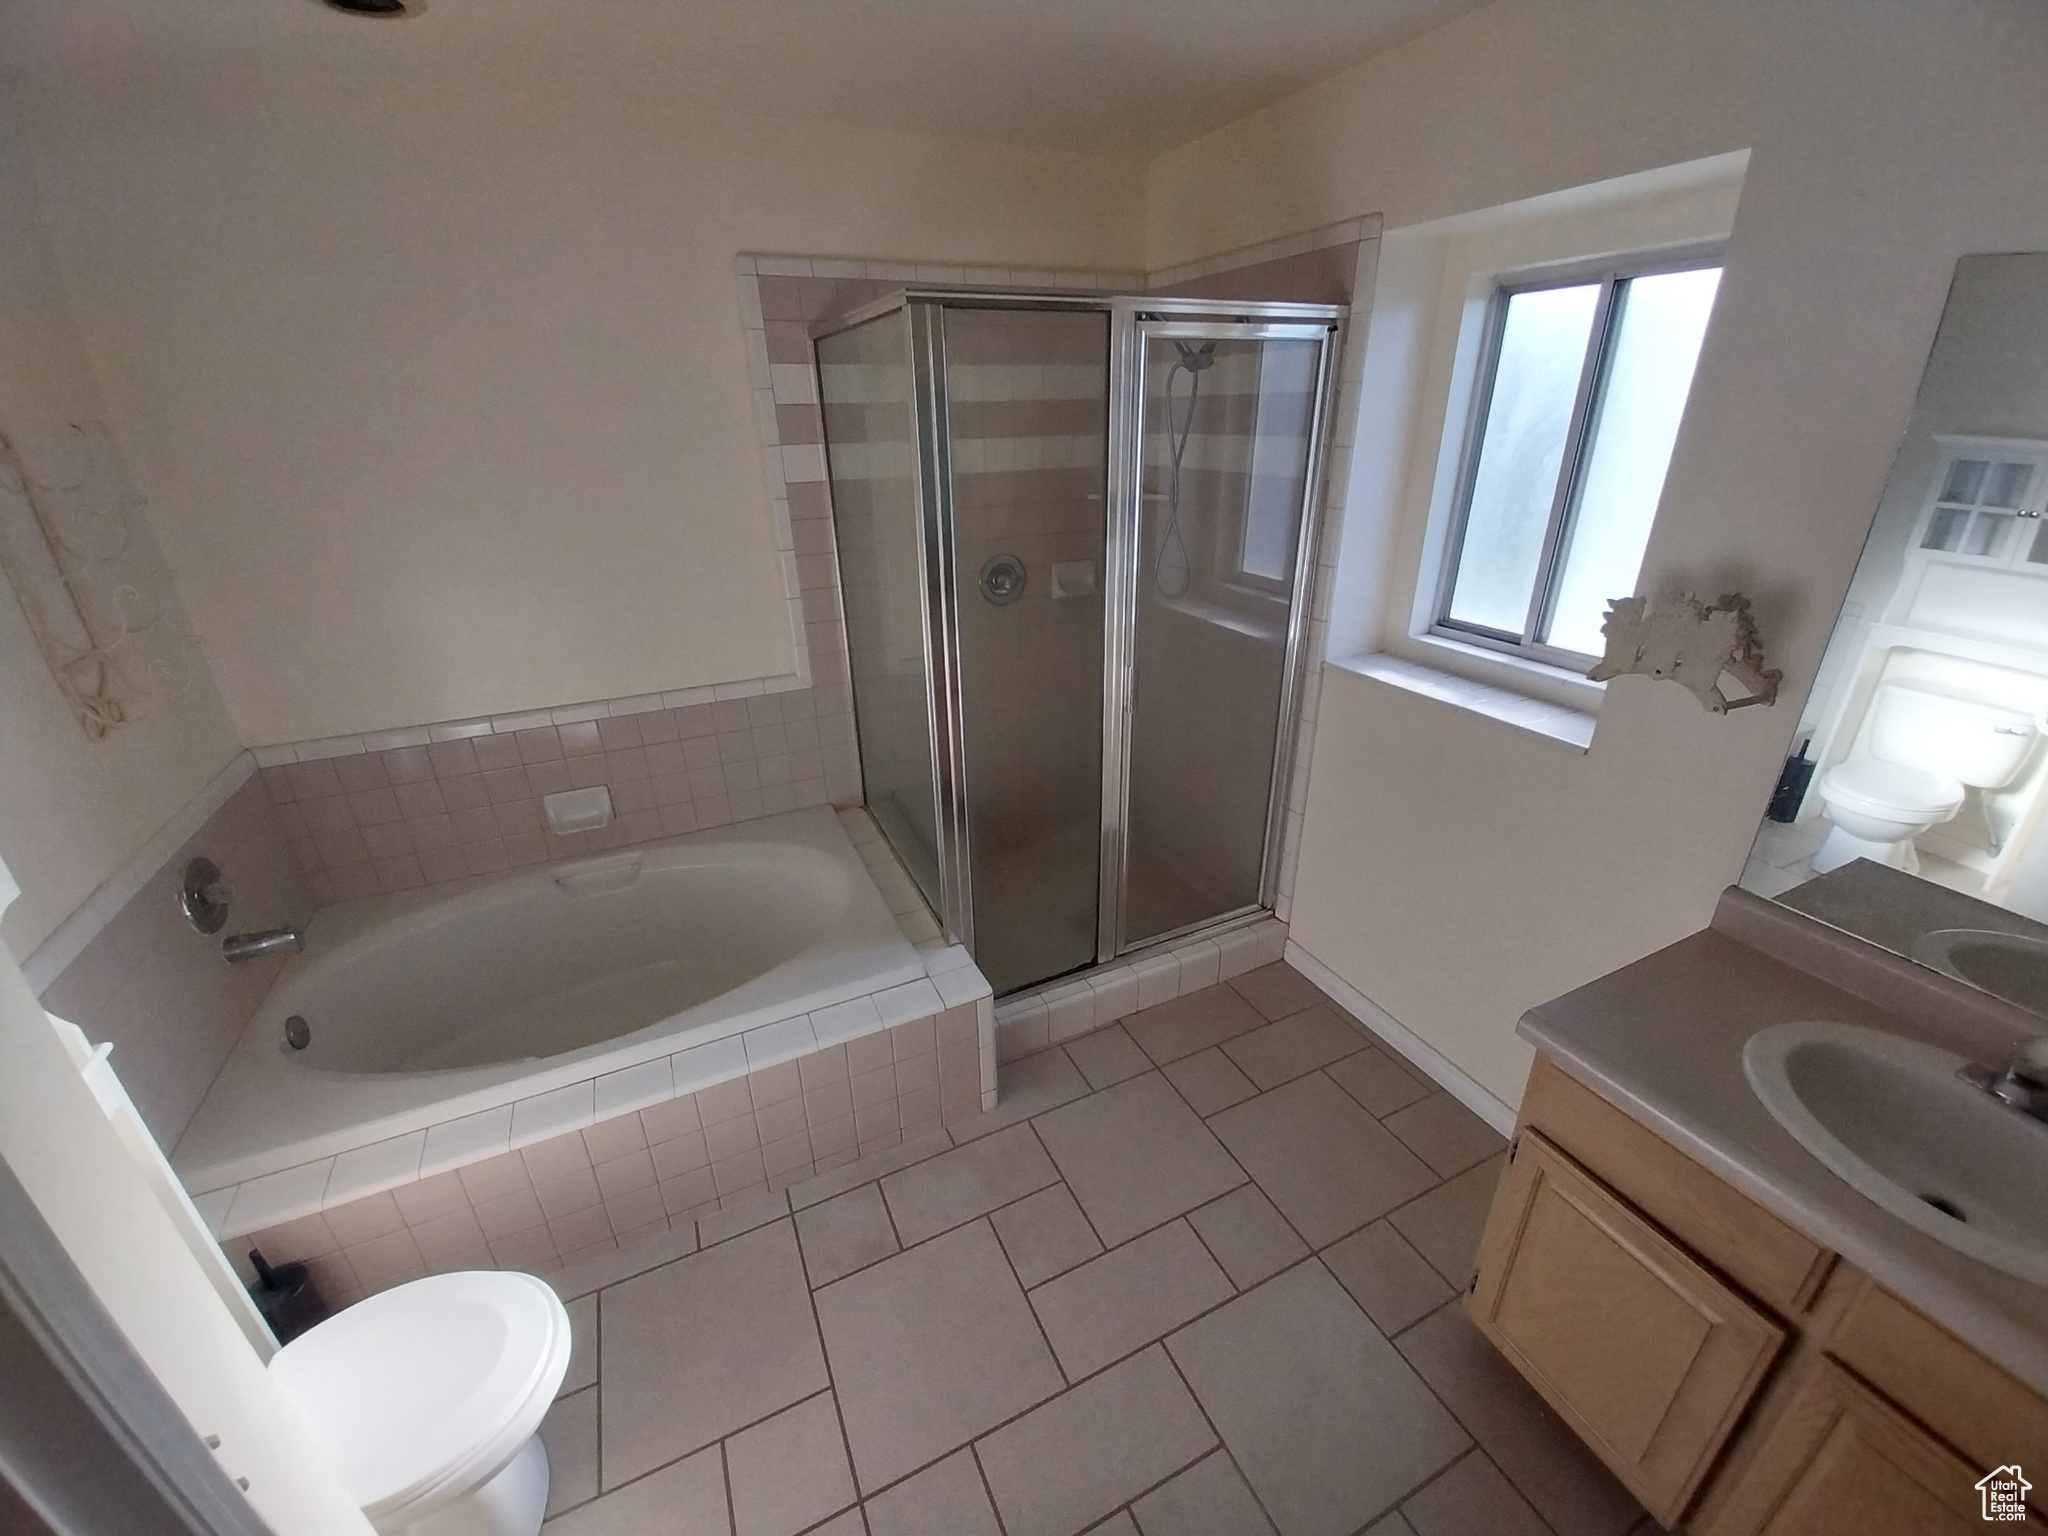 Full bathroom featuring shower with separate bathtub, toilet, tile floors, and vanity